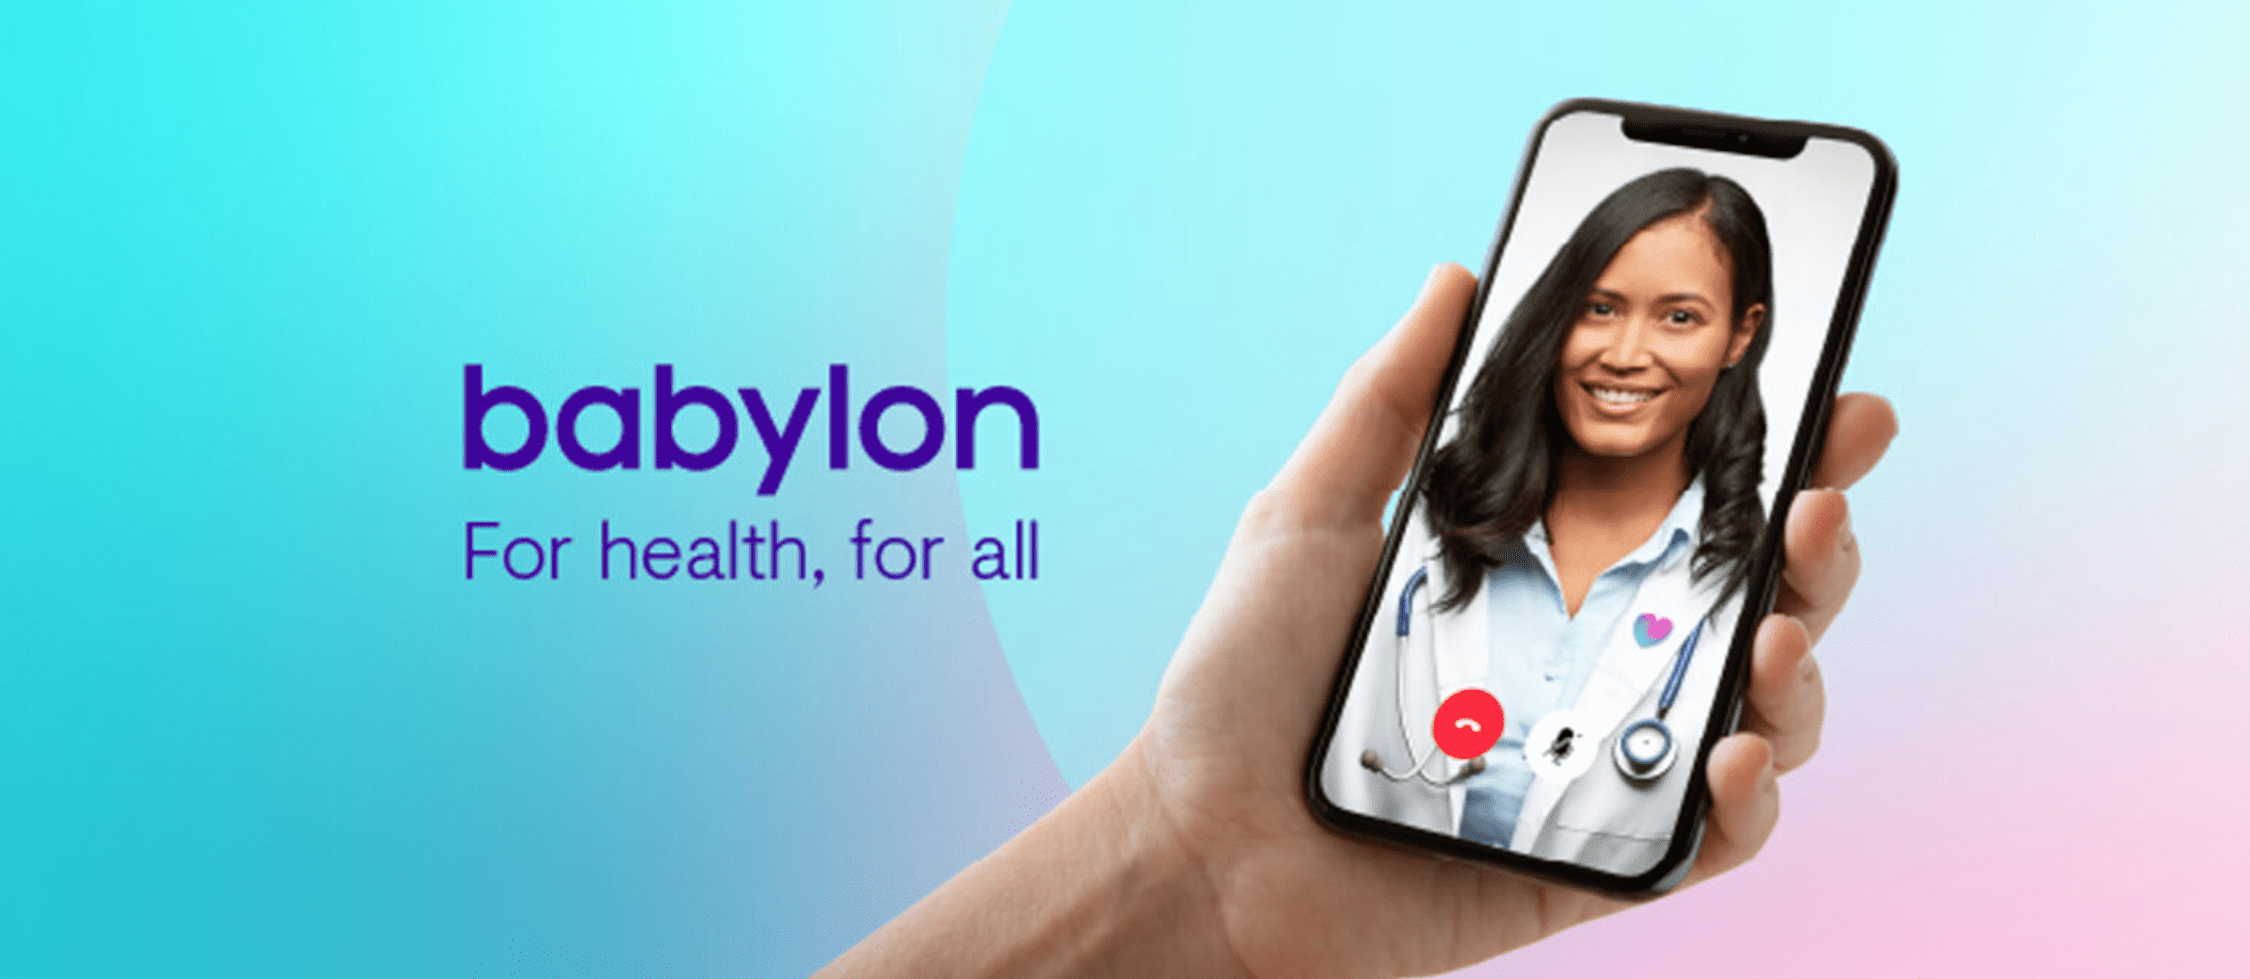 Babylon Acquires Patient Engagement Platform DayToDay